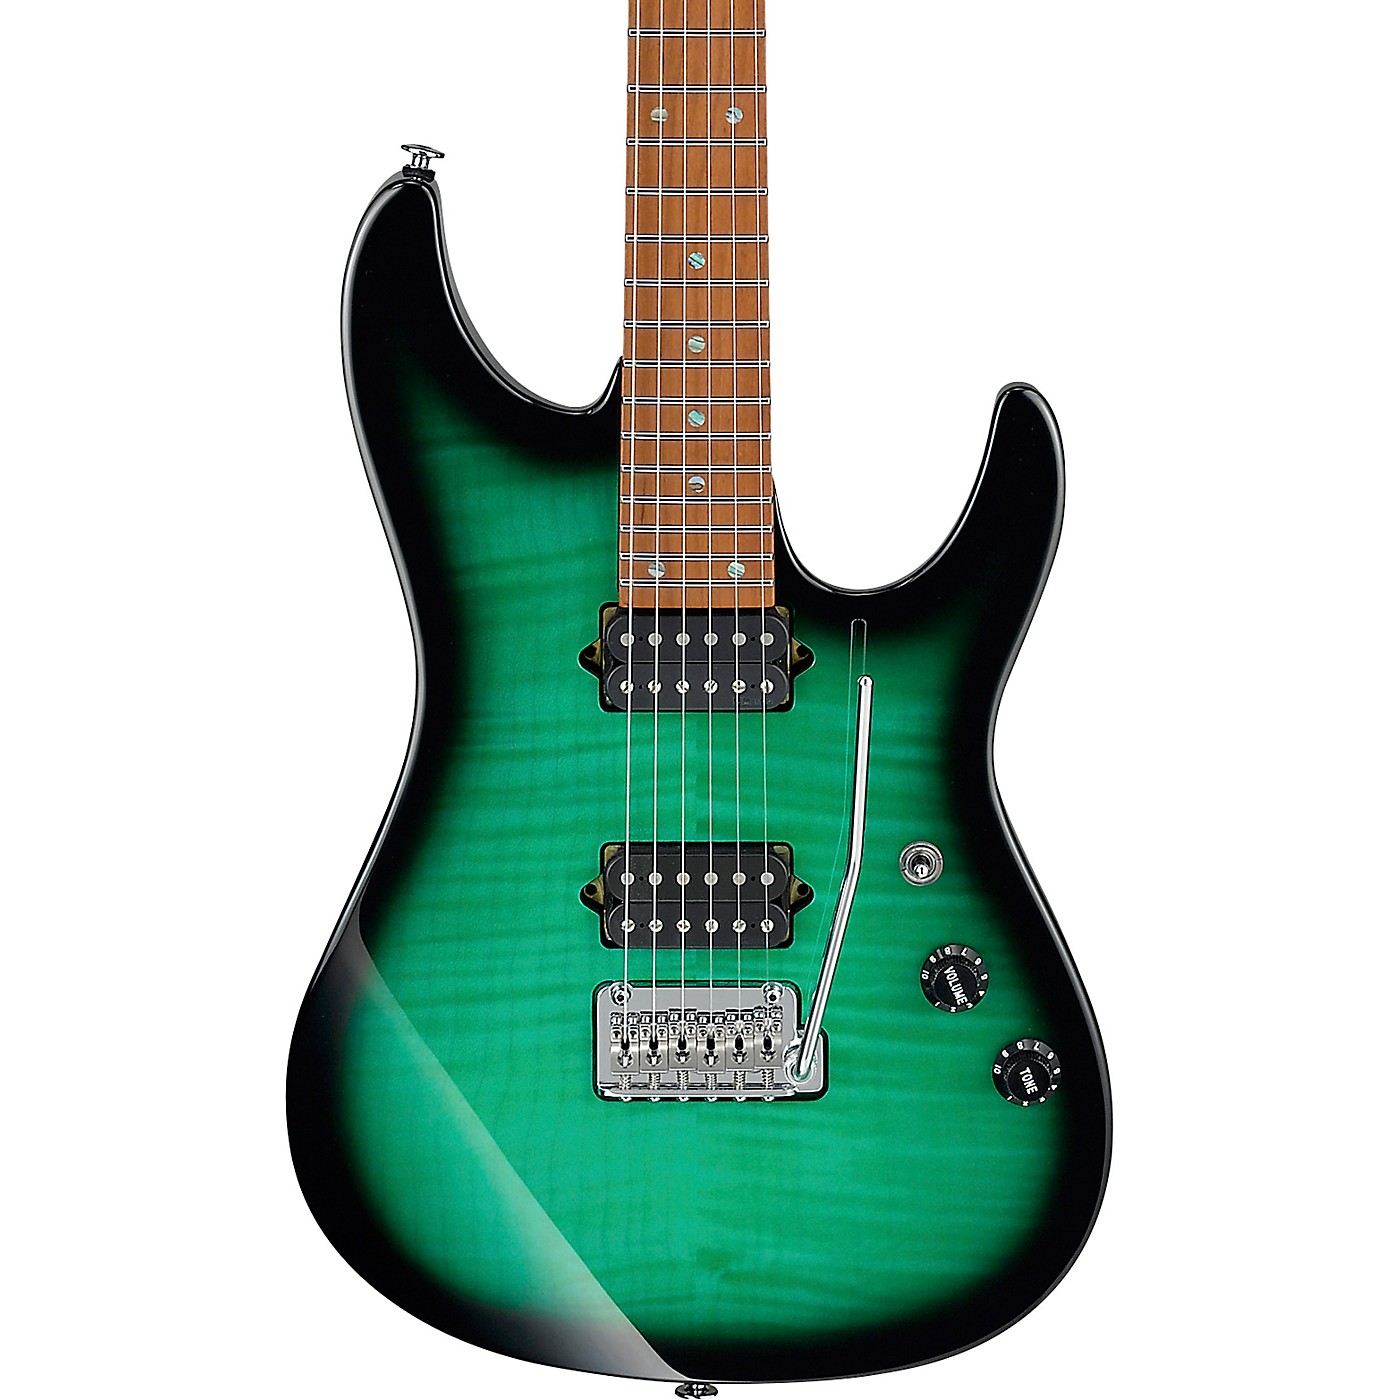 Ibanez MSM100 Marco Sfogli Signature Electric Guitar thumbnail